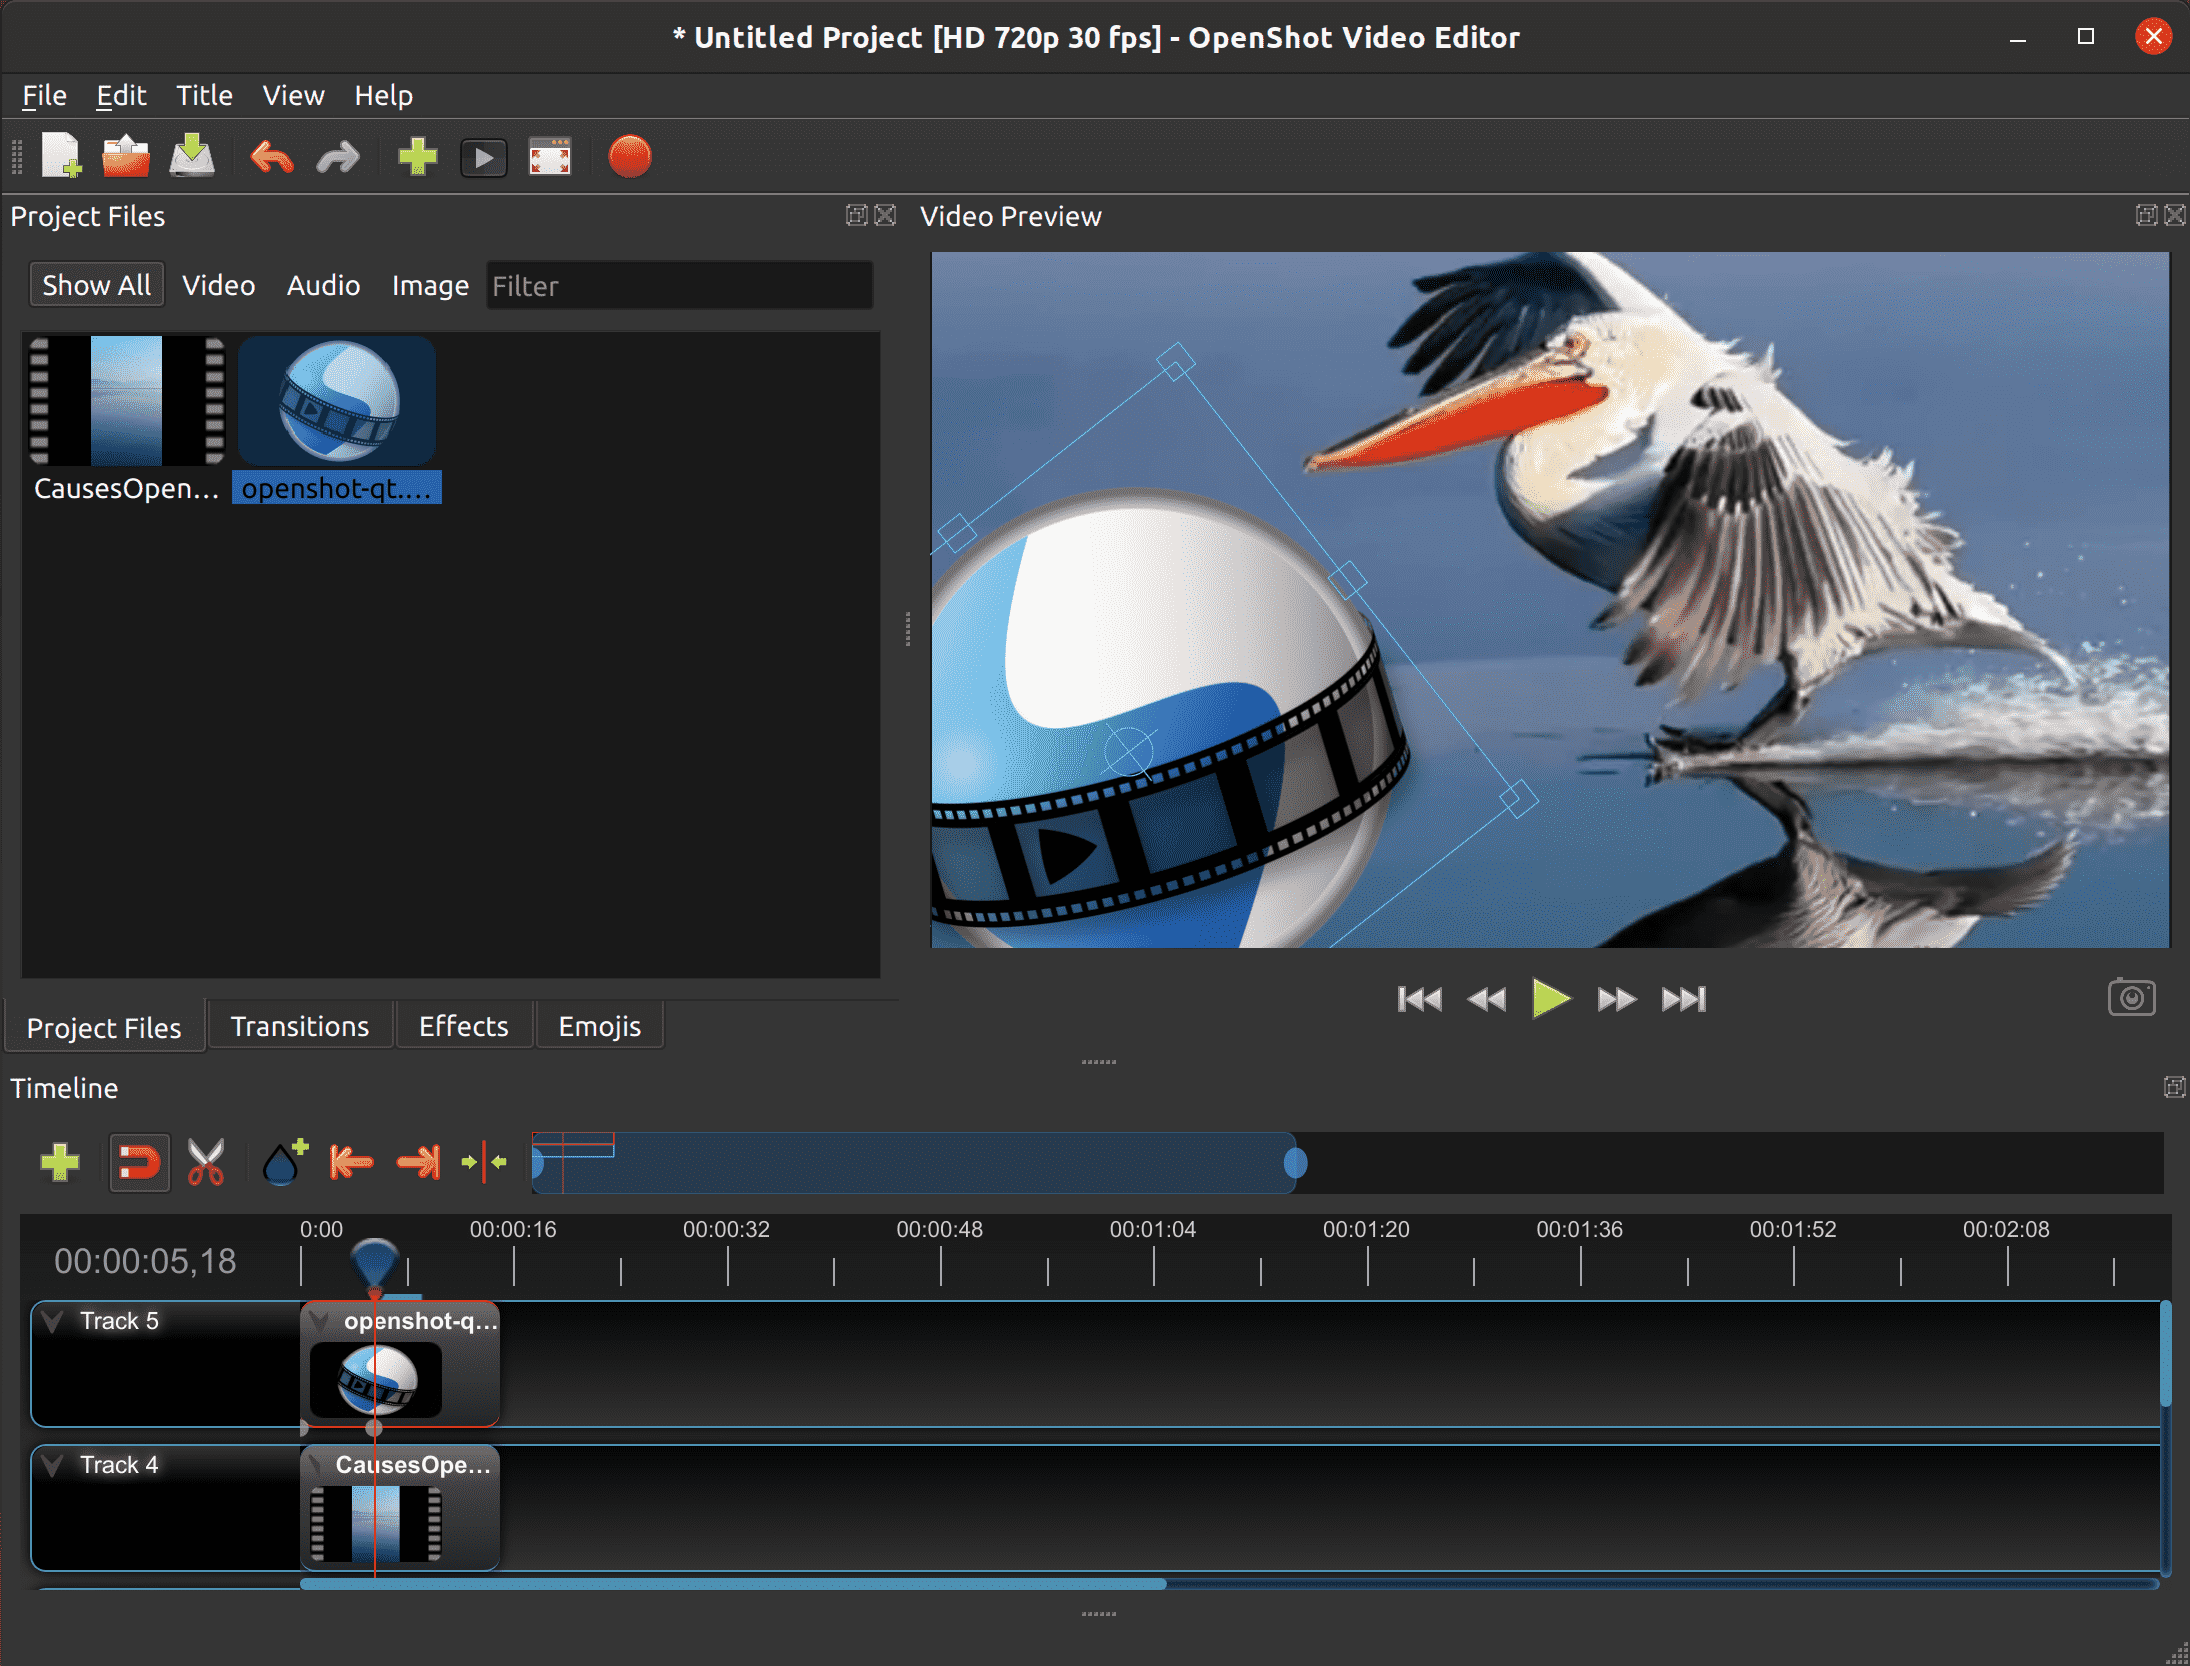 openshot mkv video editor 